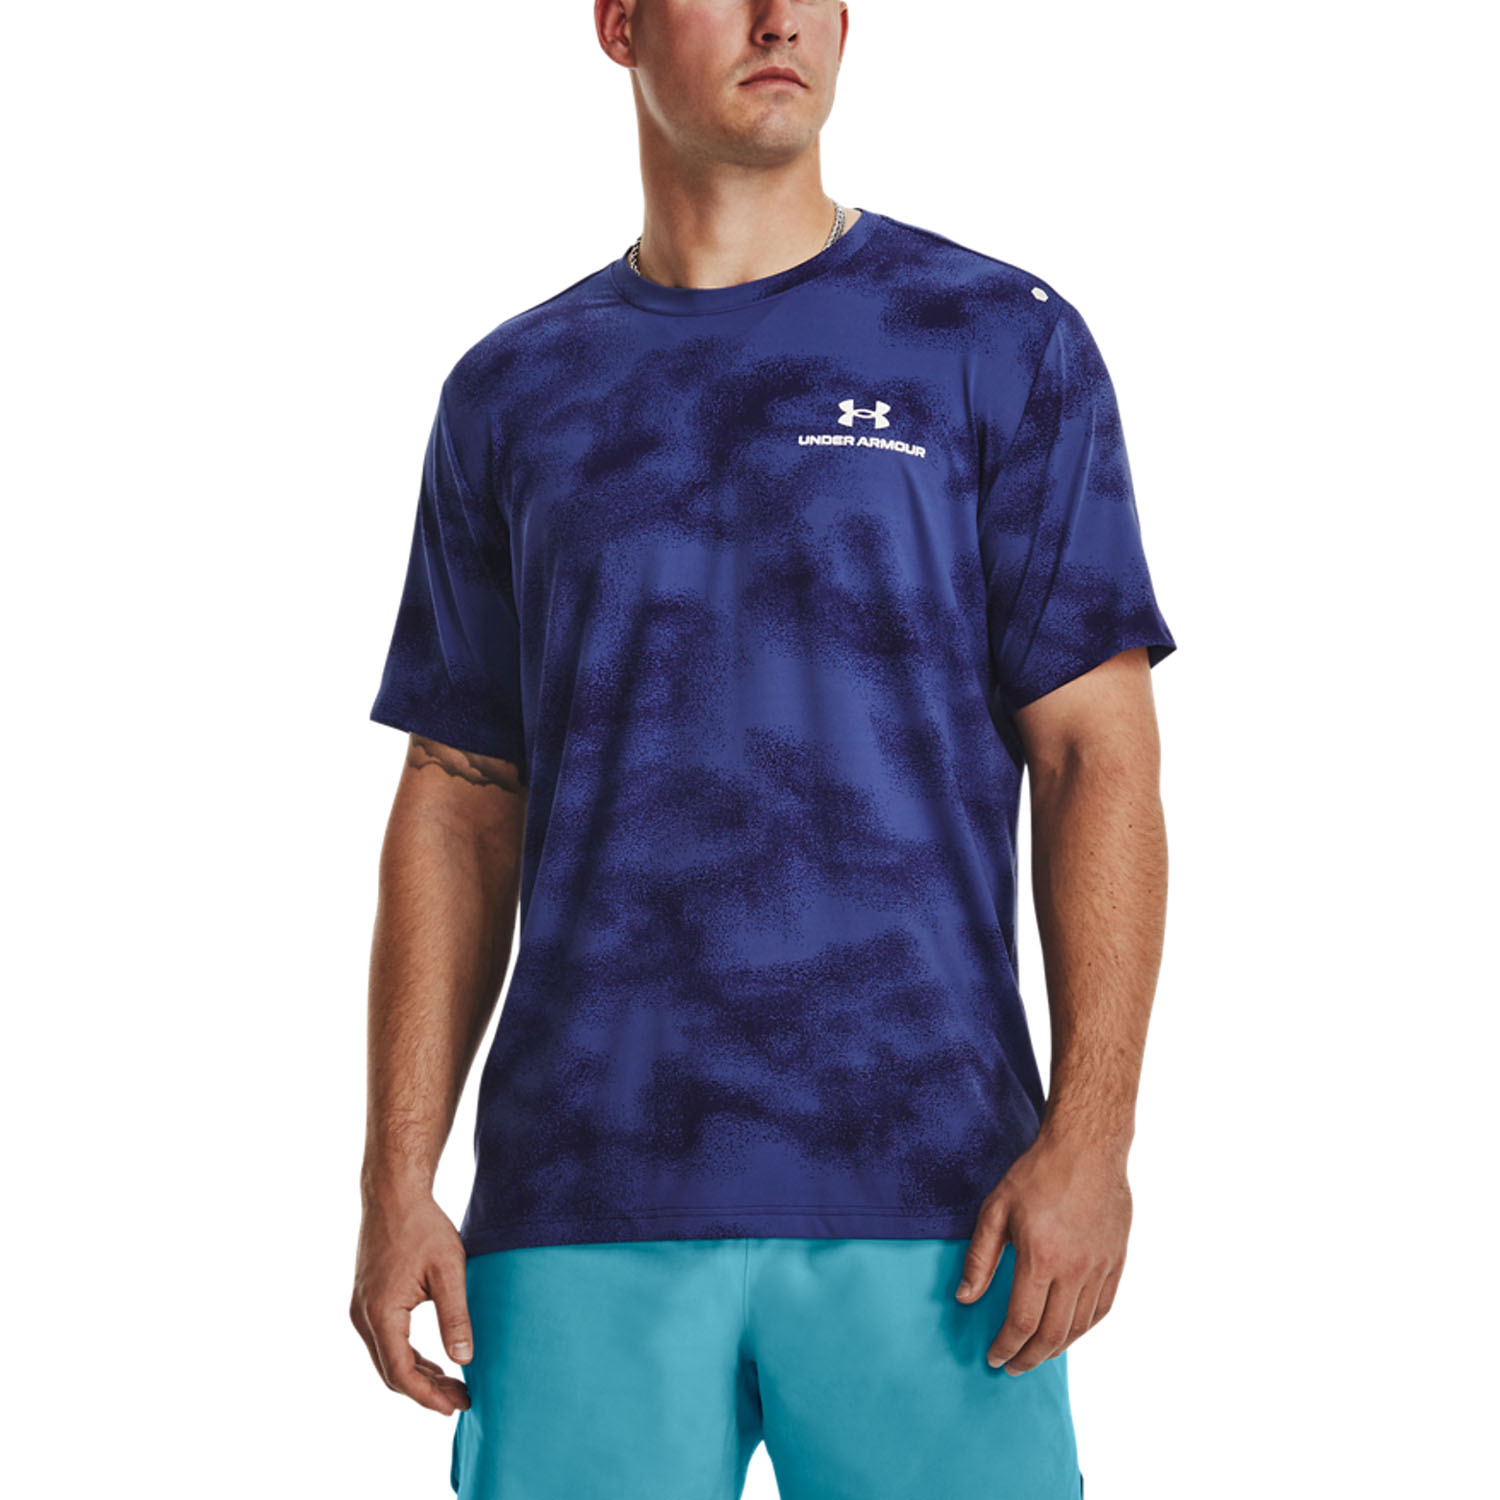 Under Armour Rush Energy Print Men's Tennis T-Shirt - Sonar Blue